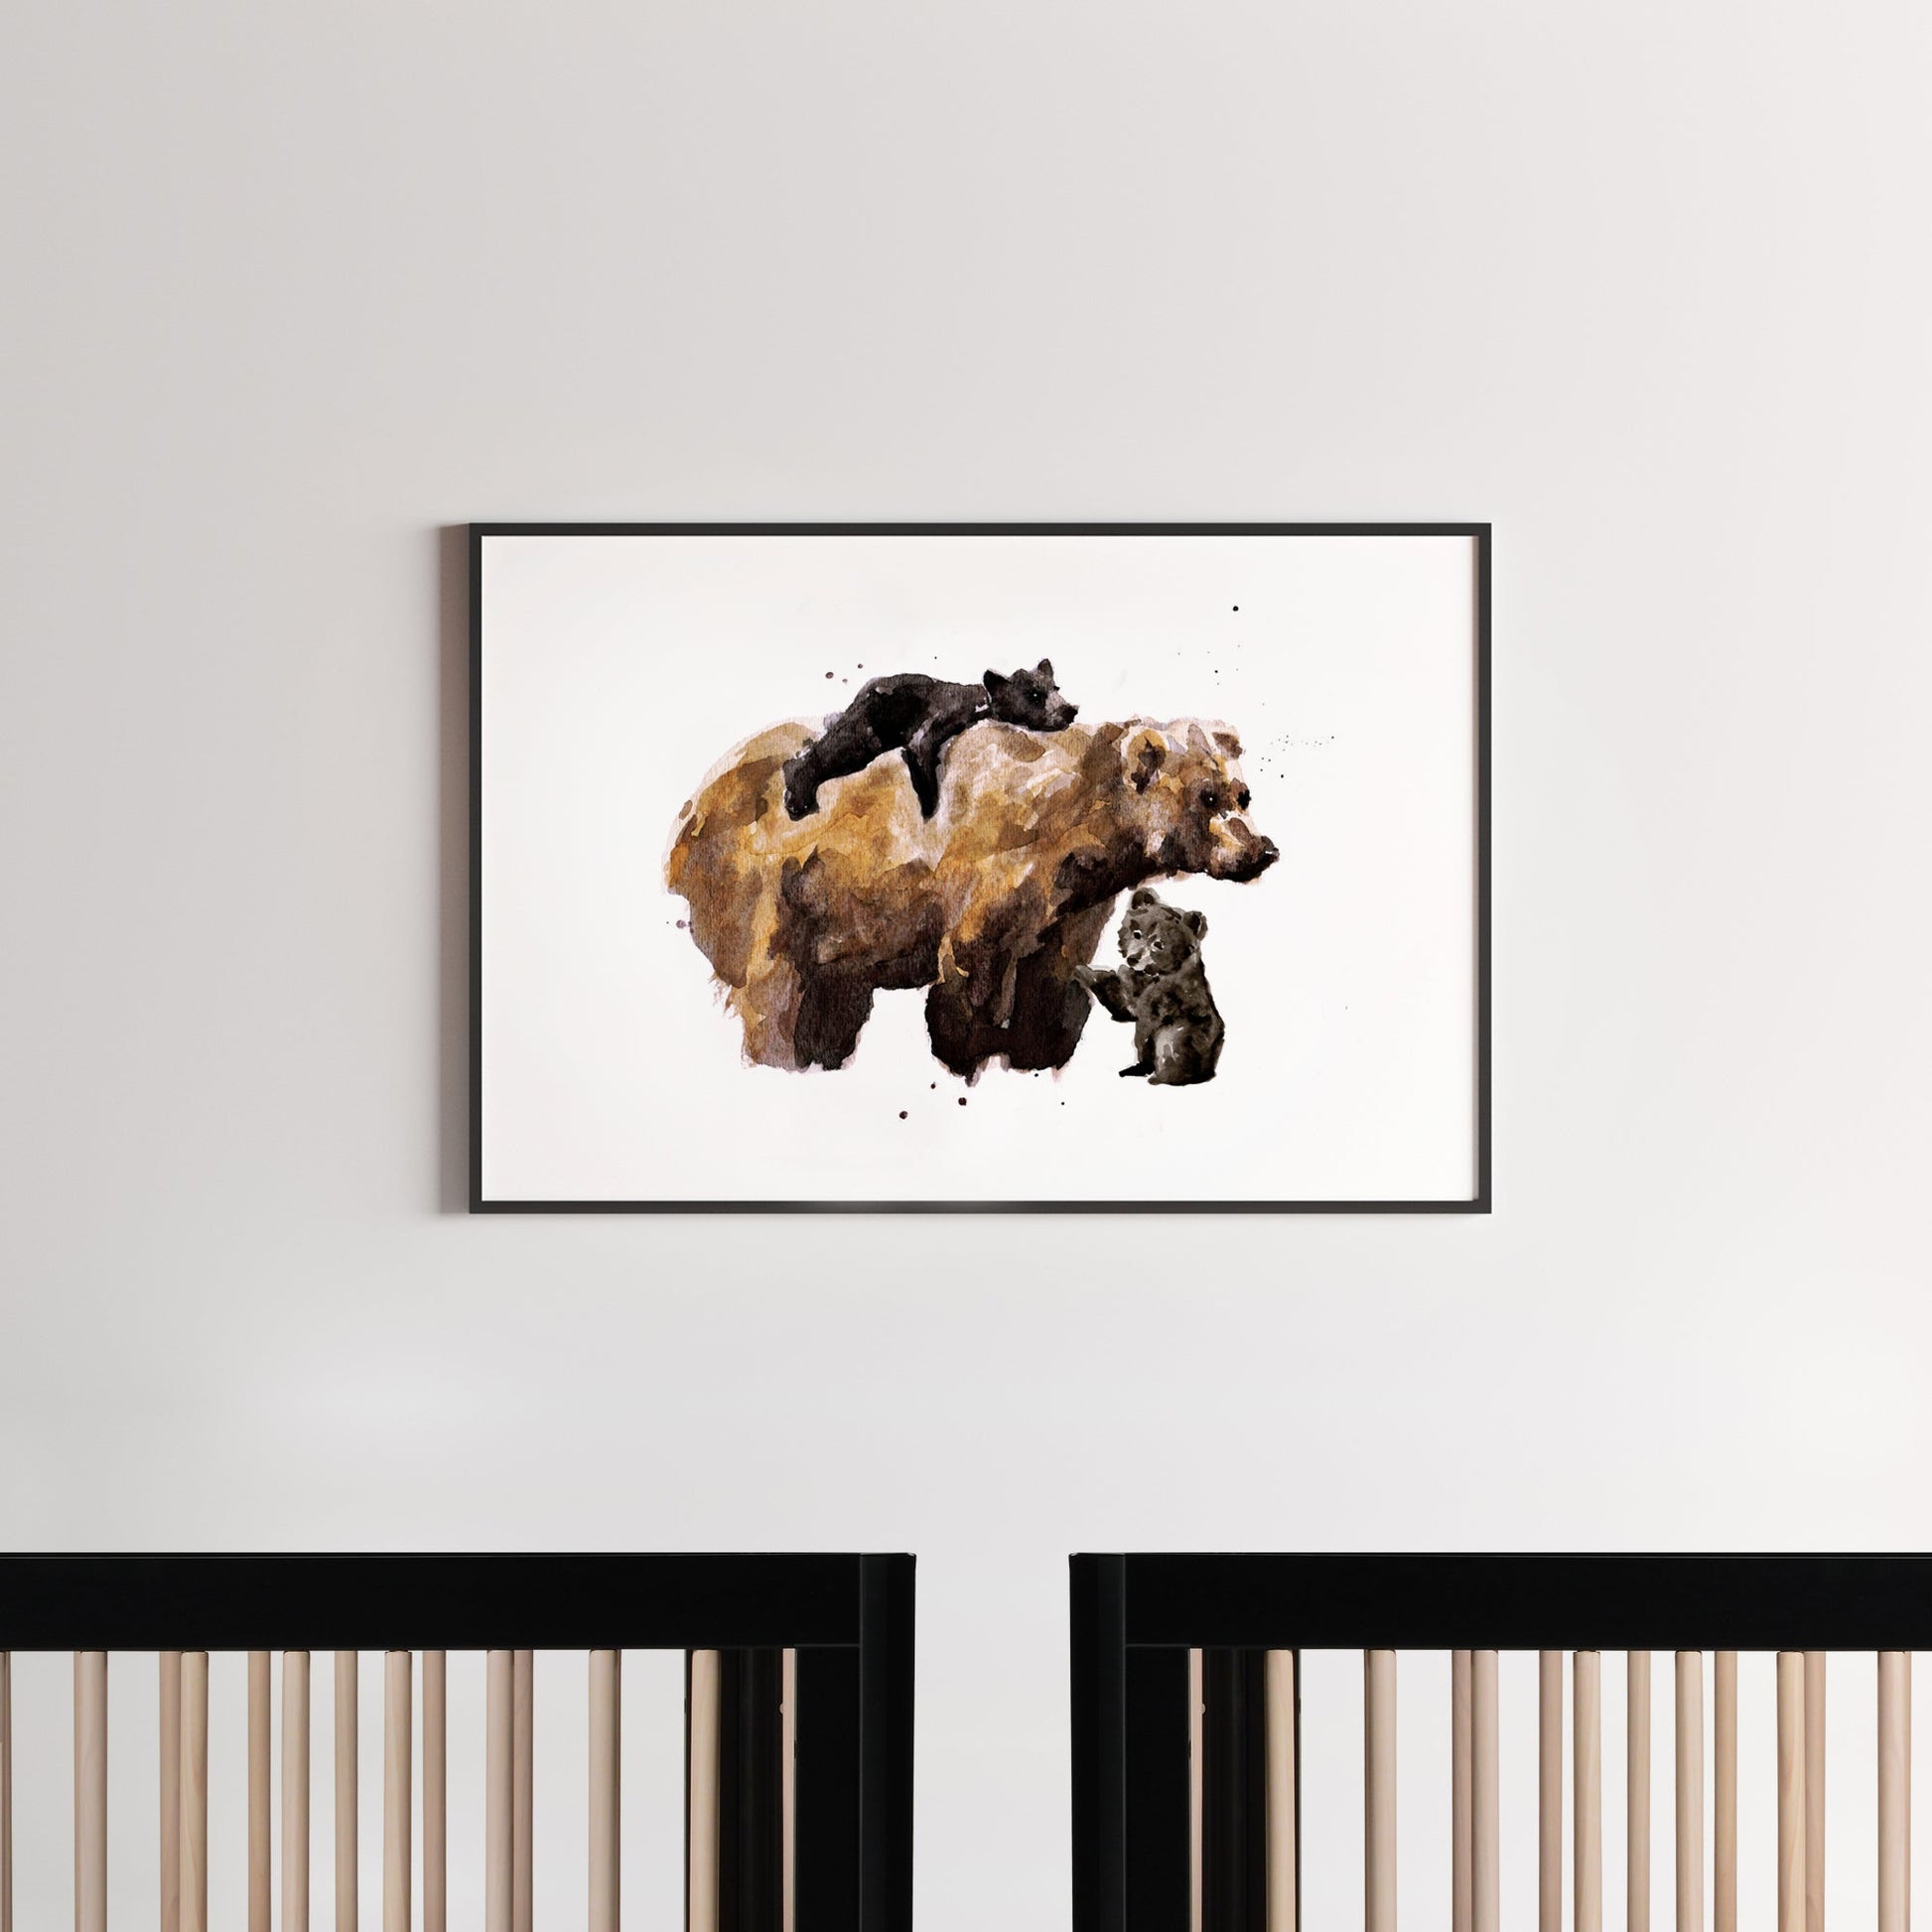 ALASKA BABY BEAR kisses - Mama Bear and Baby Bear - Cute Baby Bear Cub  Photos - Bear Wall Art - Mama Bear - Mama and Baby - Nursery Wall Art